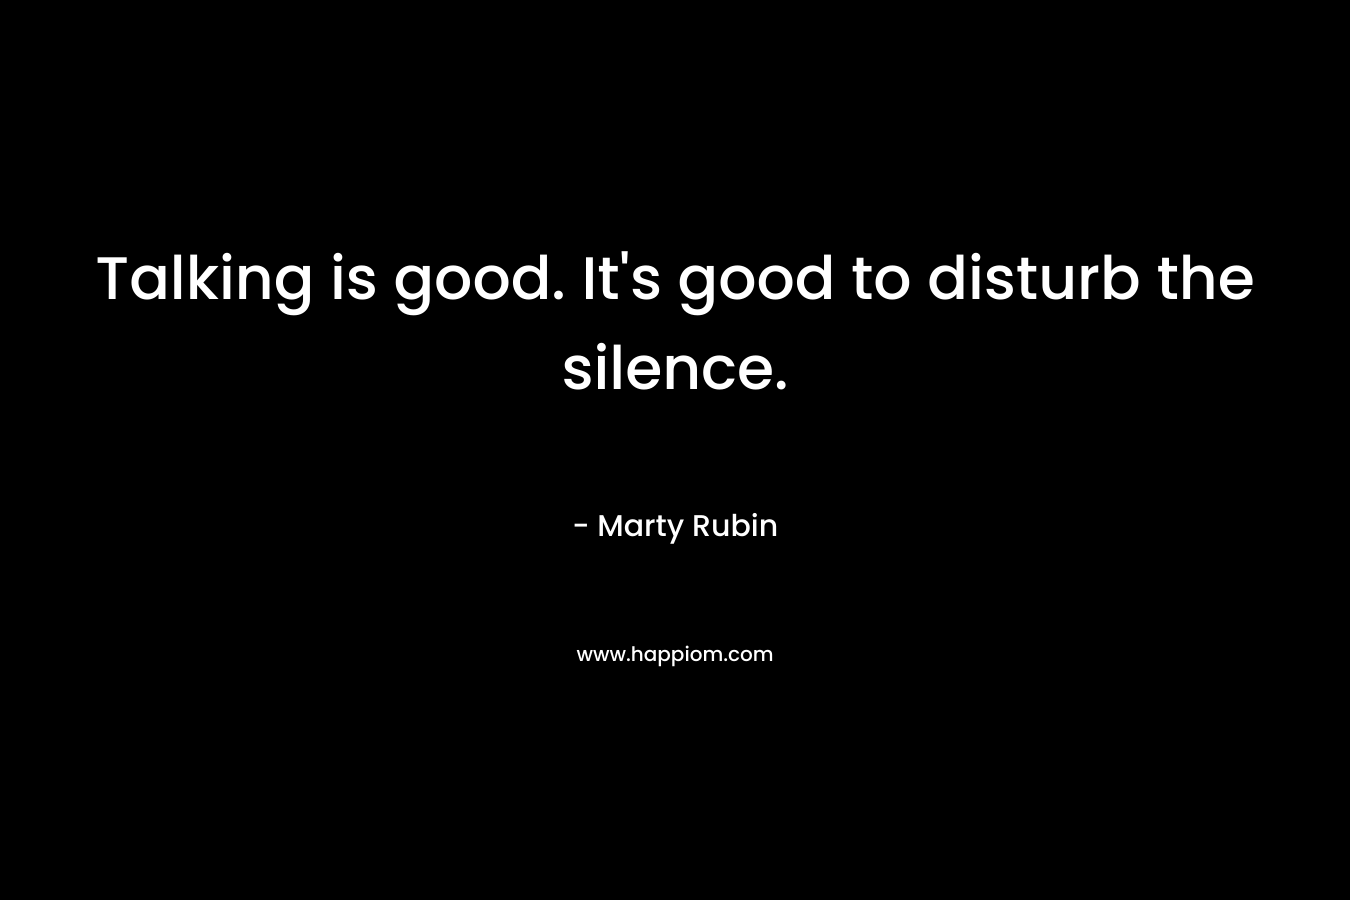 Talking is good. It's good to disturb the silence.